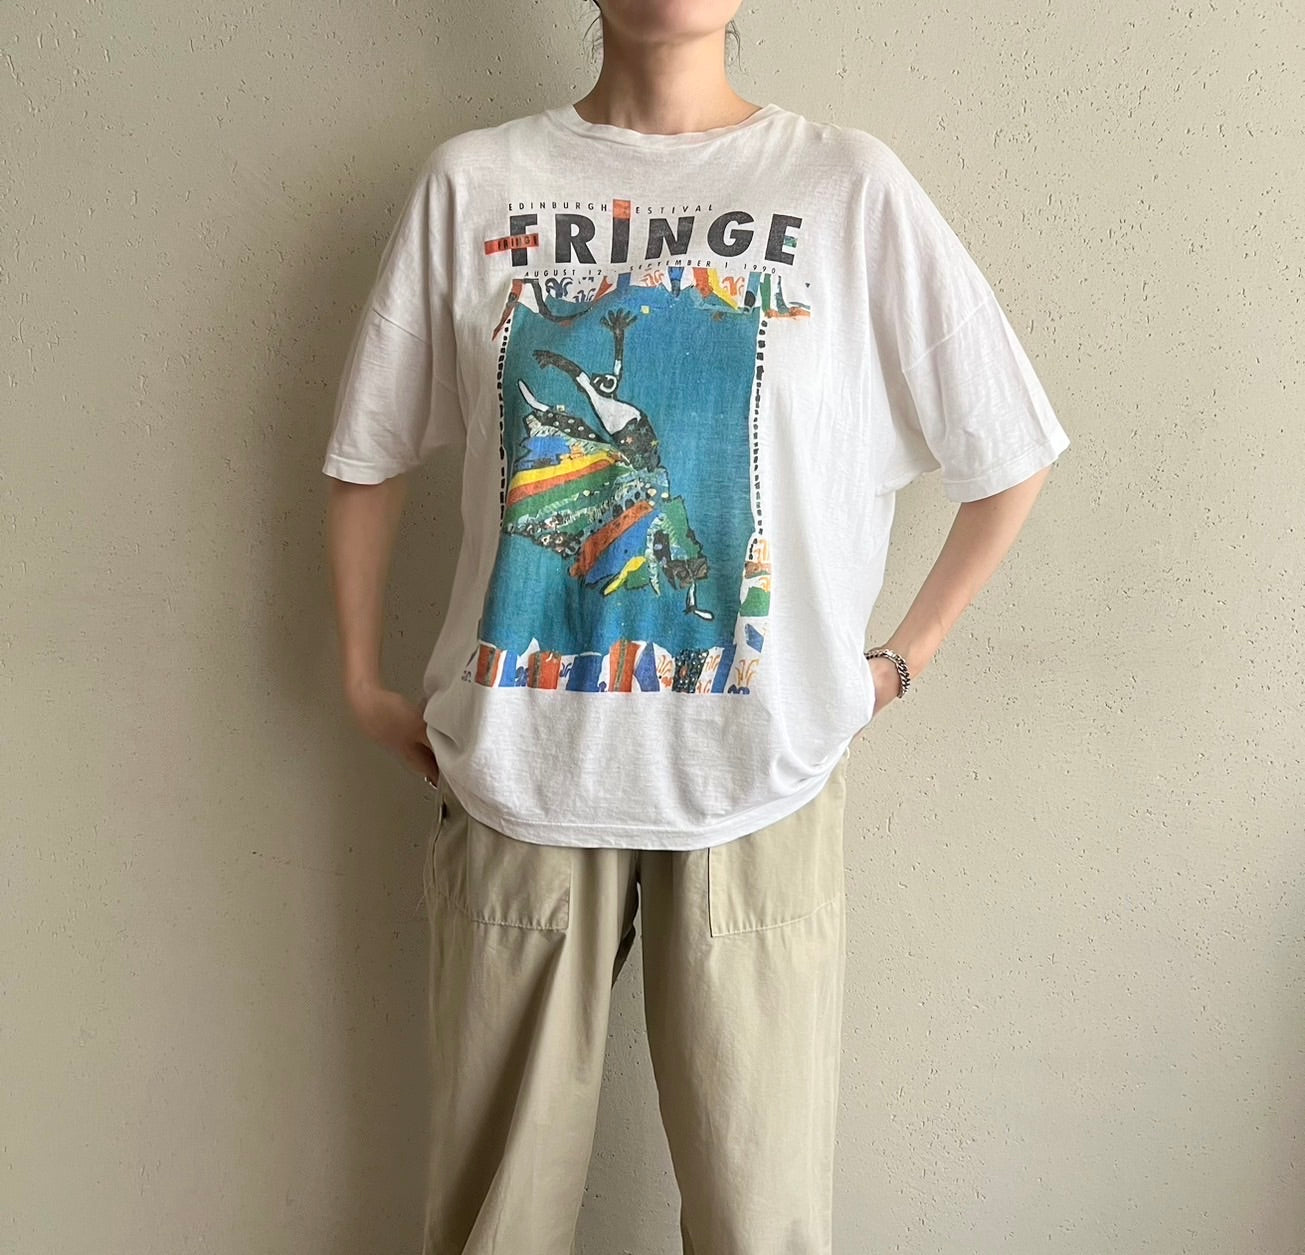 90s " Edinburgh Festival Fringe” Printed T-shirt